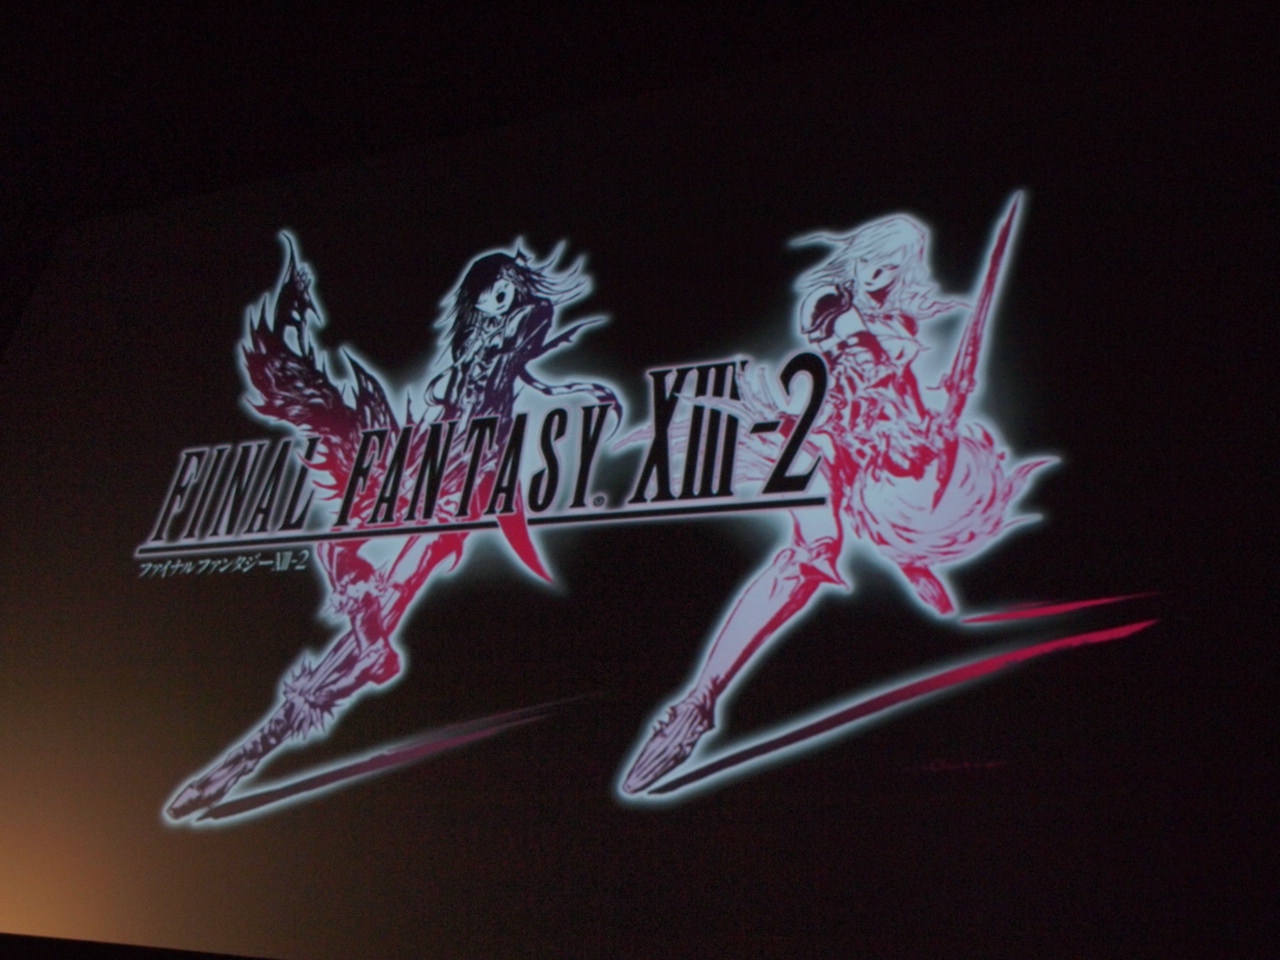 Final Fantasy Xiii 2 Announced Gematsu